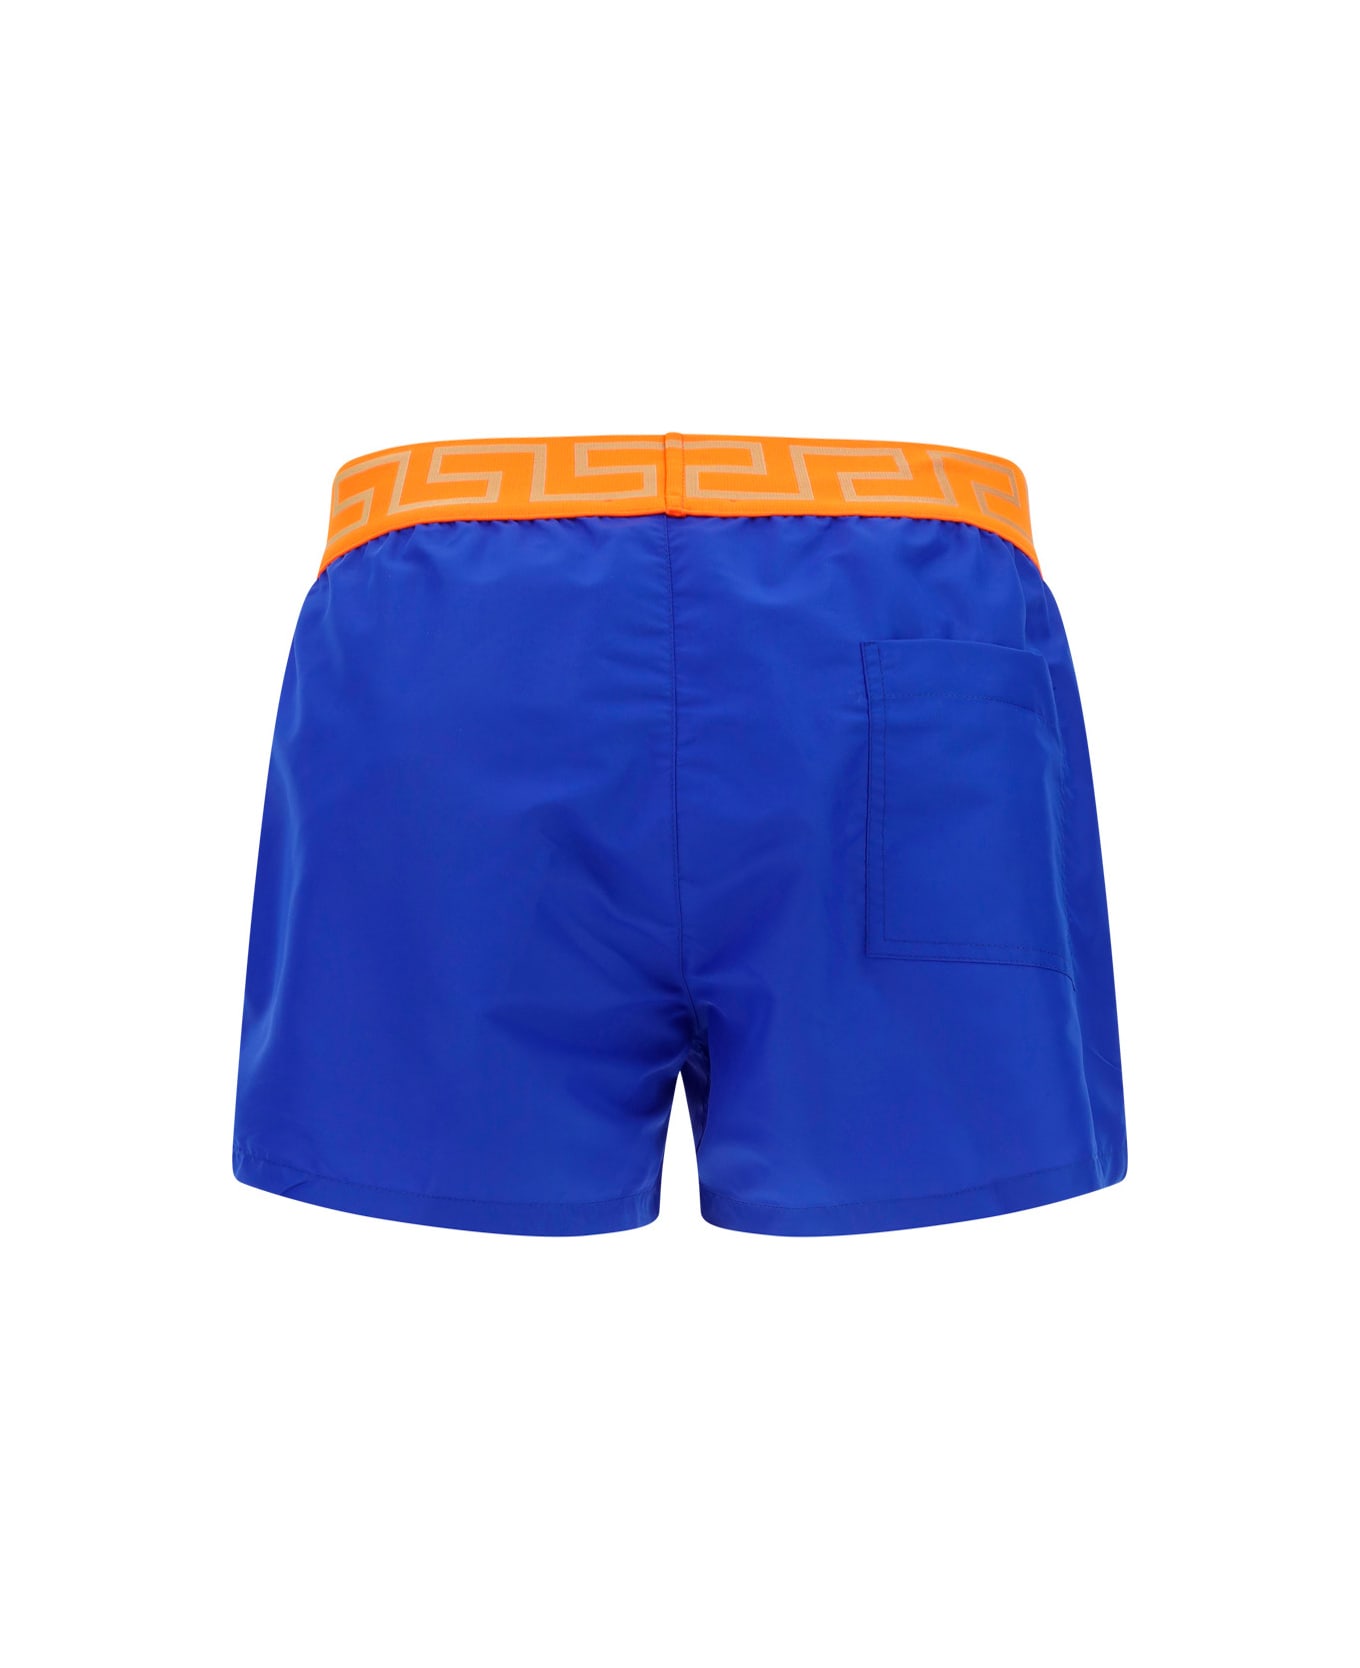 Versace Swimsuit - Cobalt+arancio Fluo